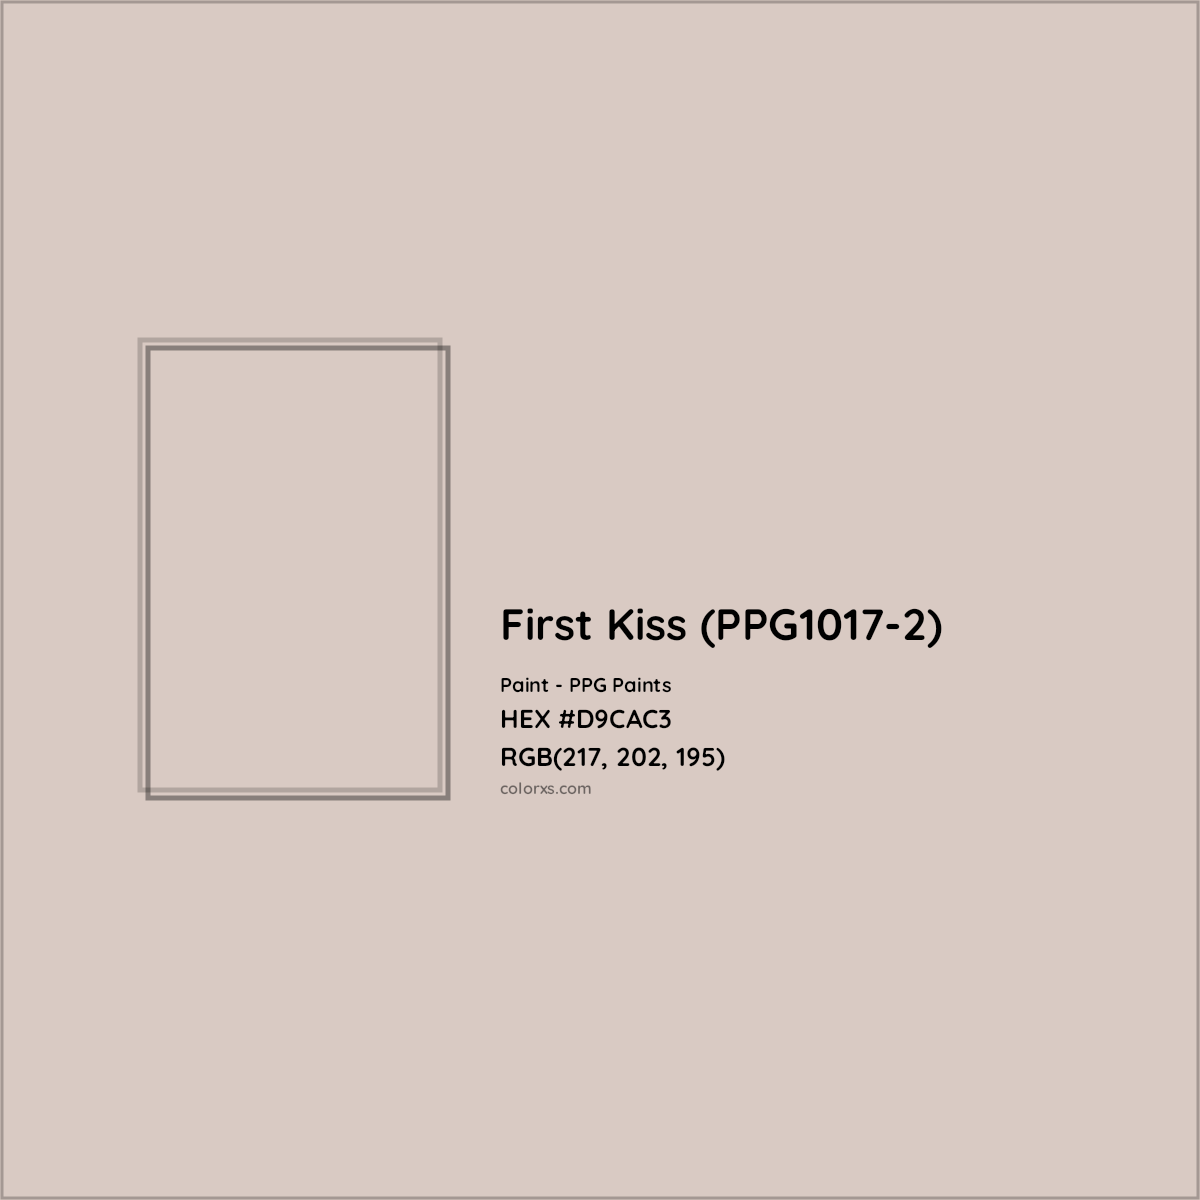 HEX #D9CAC3 First Kiss (PPG1017-2) Paint PPG Paints - Color Code